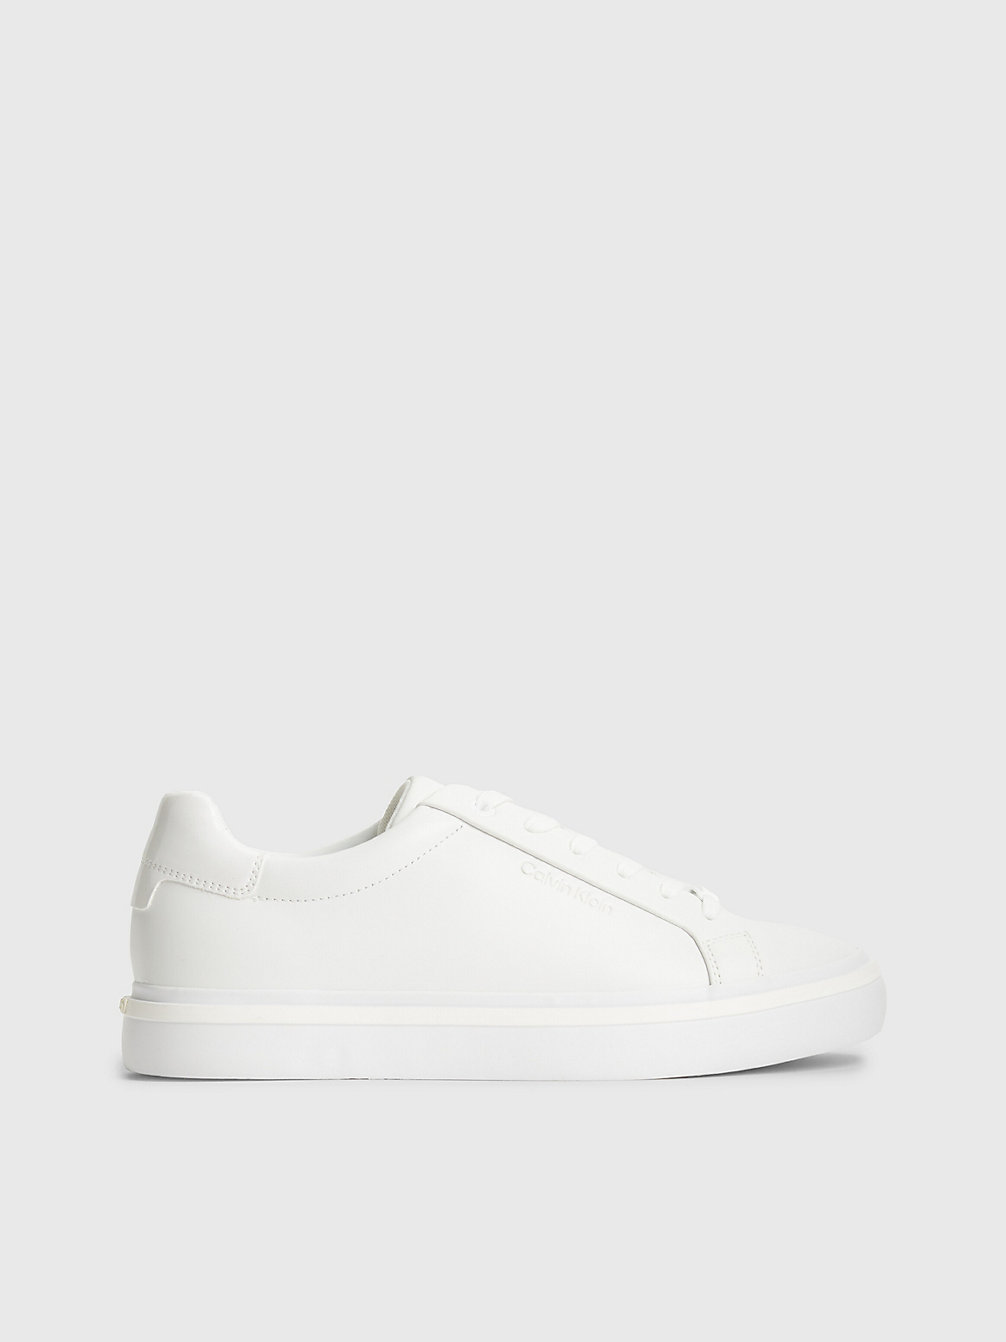 BRIGHT WHITE > Leren Sneakers > undefined dames - Calvin Klein